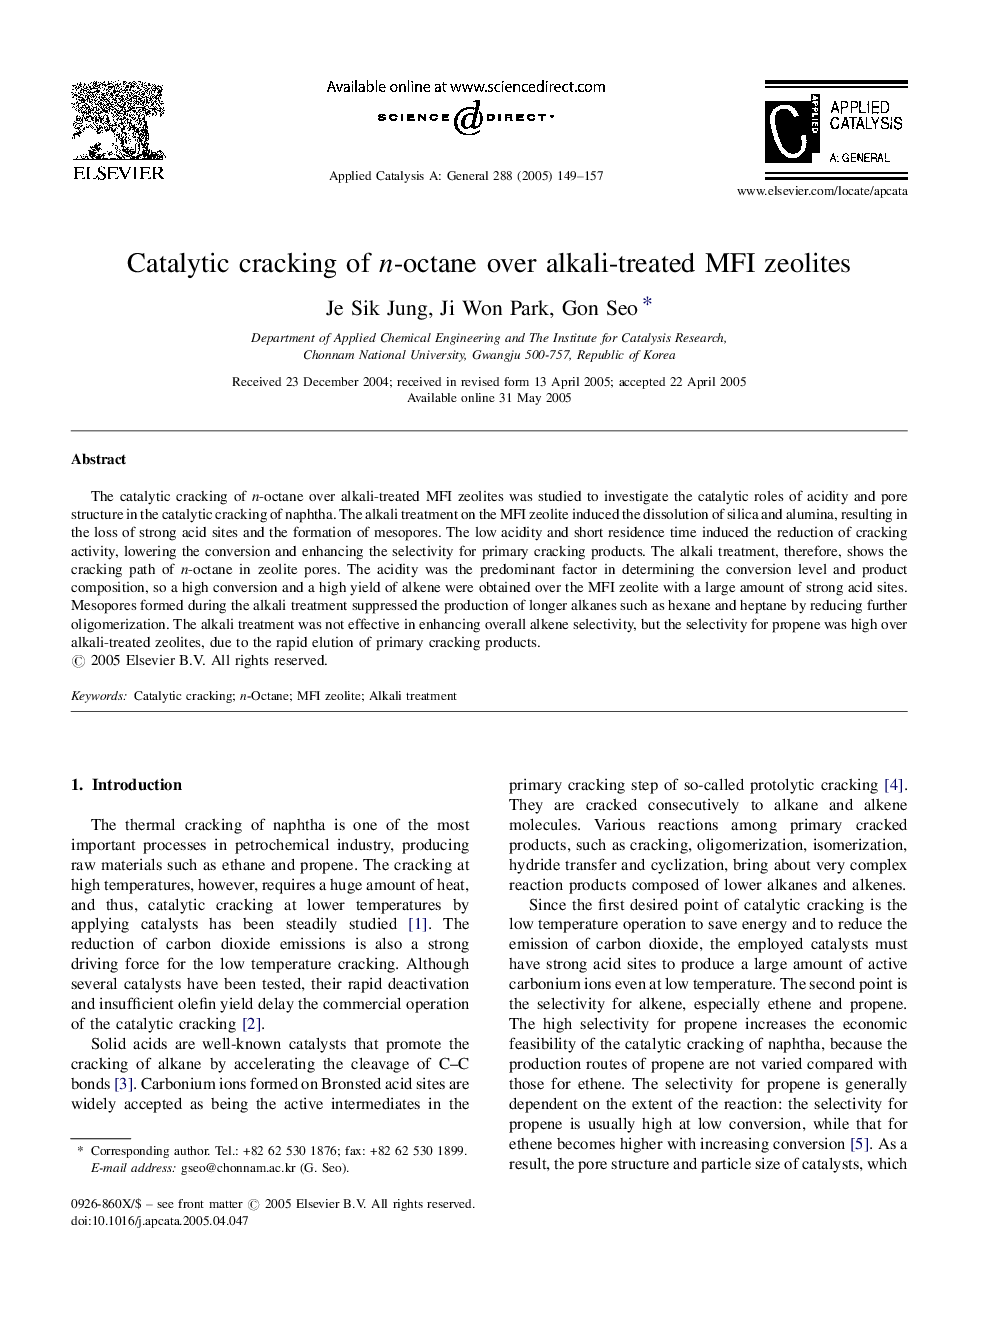 Catalytic cracking of n-octane over alkali-treated MFI zeolites